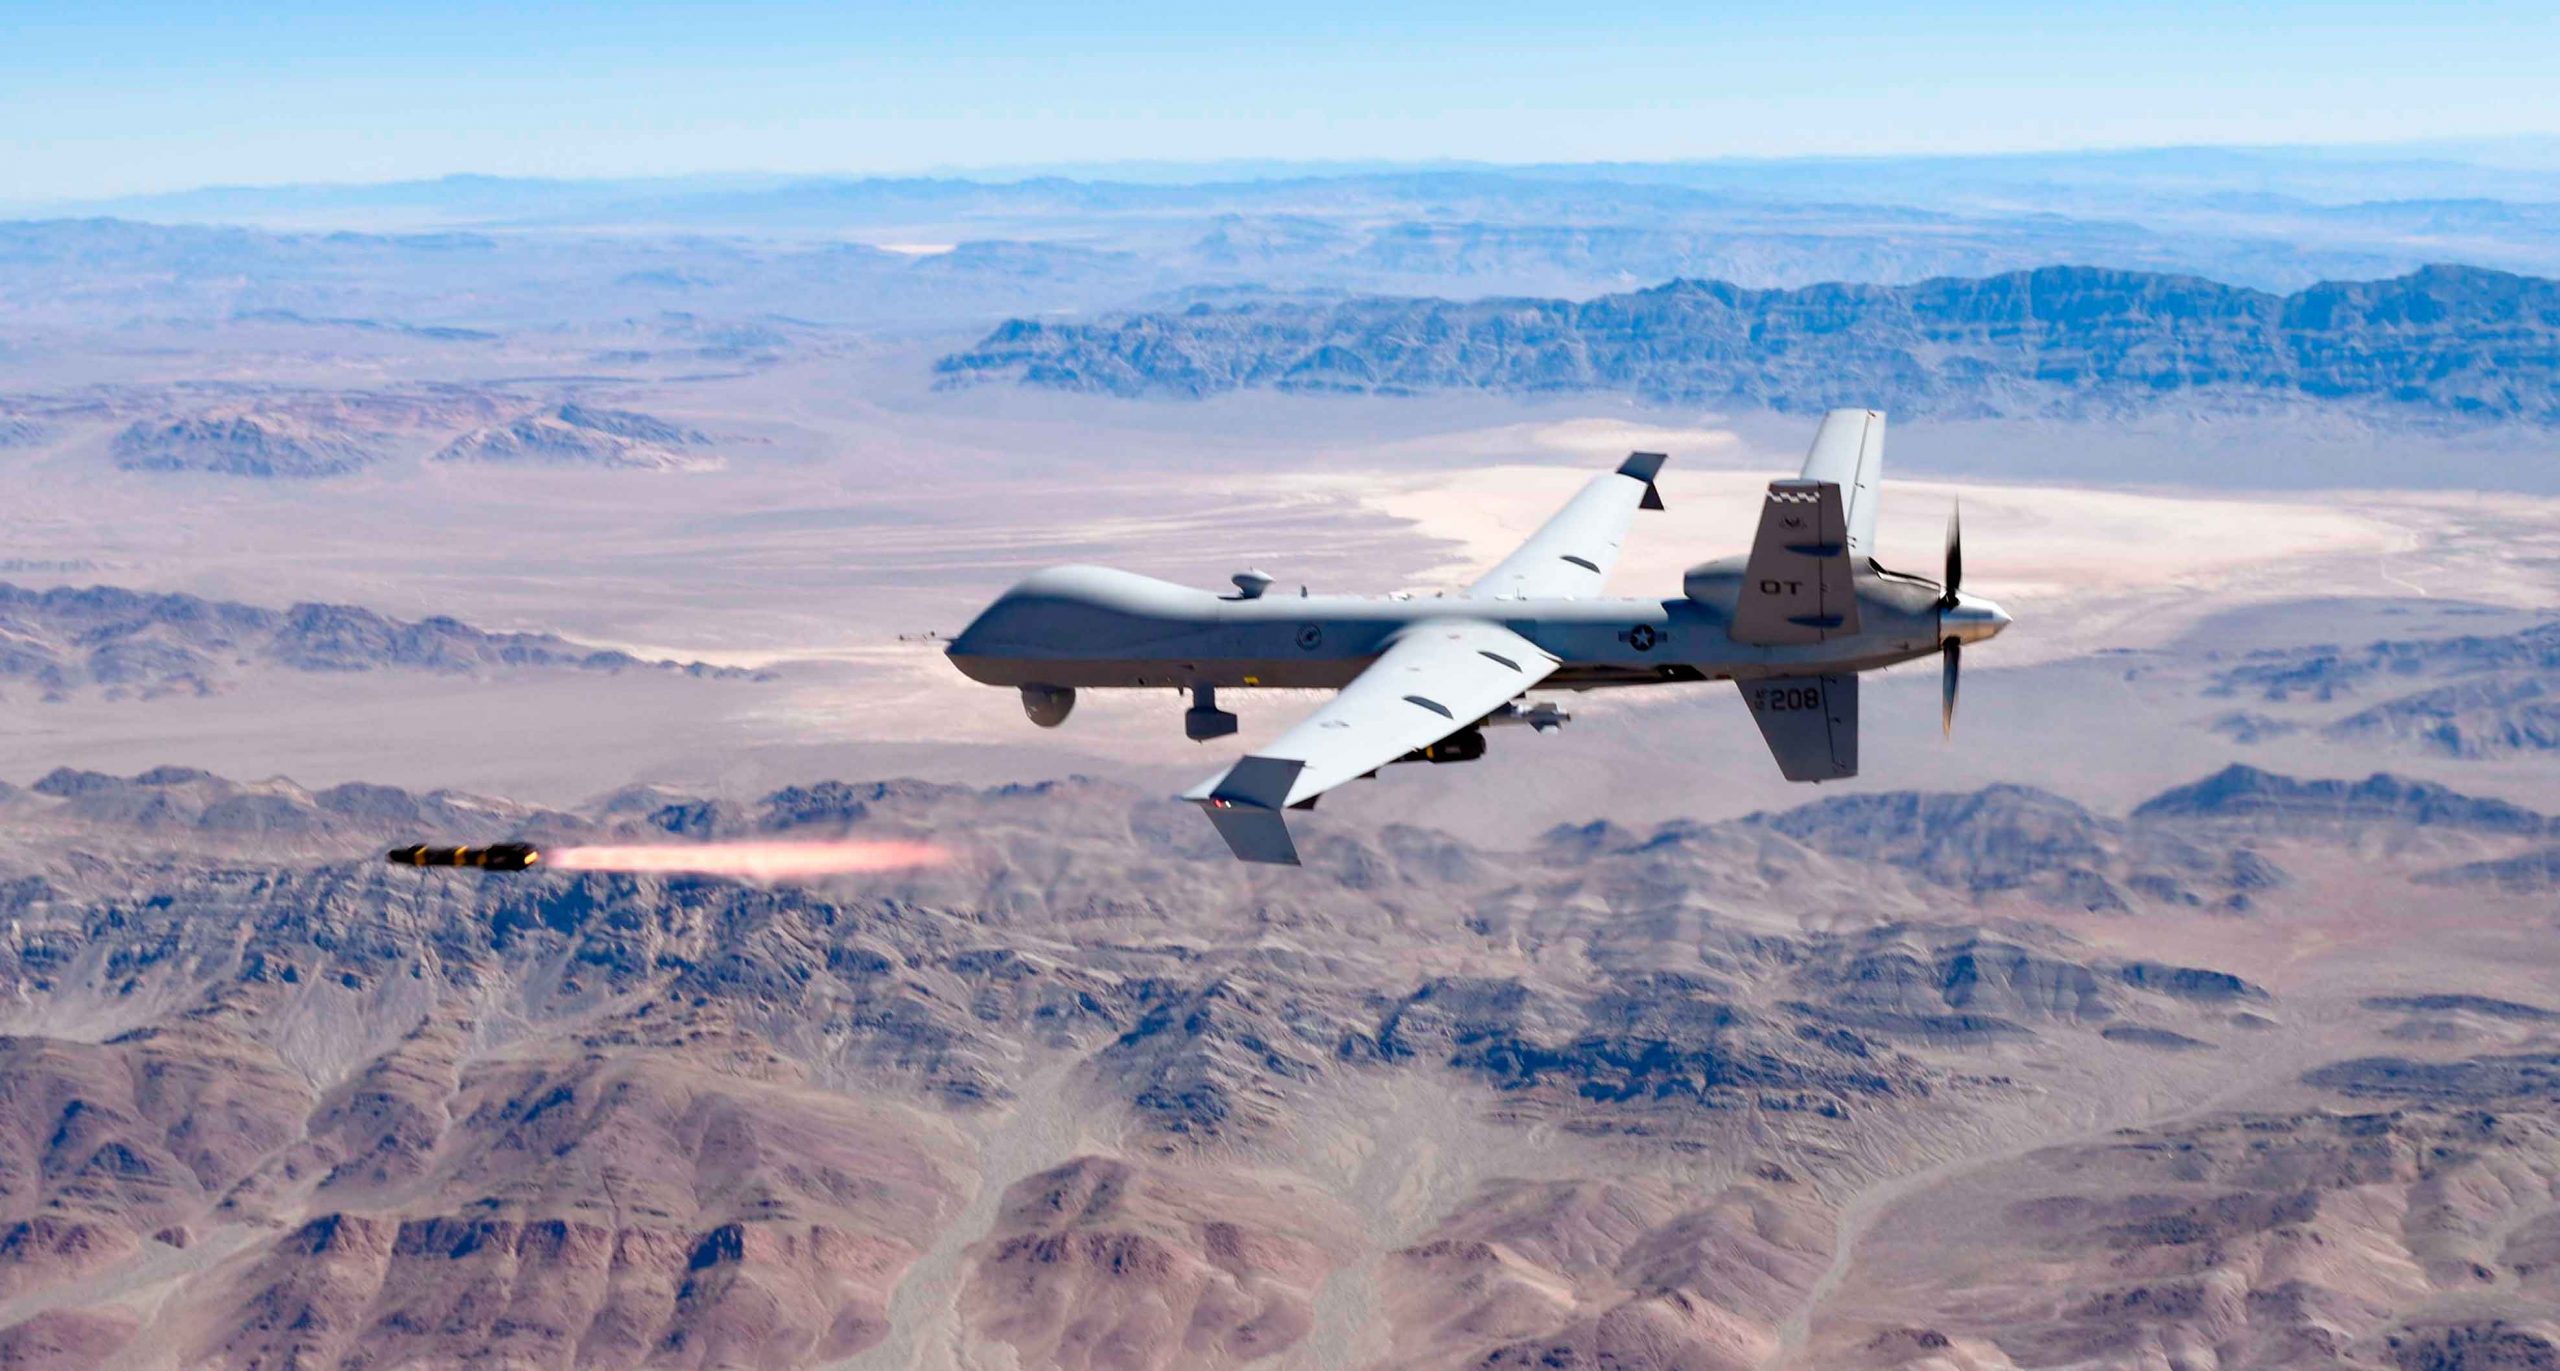 Un dron MQ-9 Reaper realizando maniobras en el desierto de Nevada. - U.S. Air Force photo / Airman 1st Class Victoria Nuzz